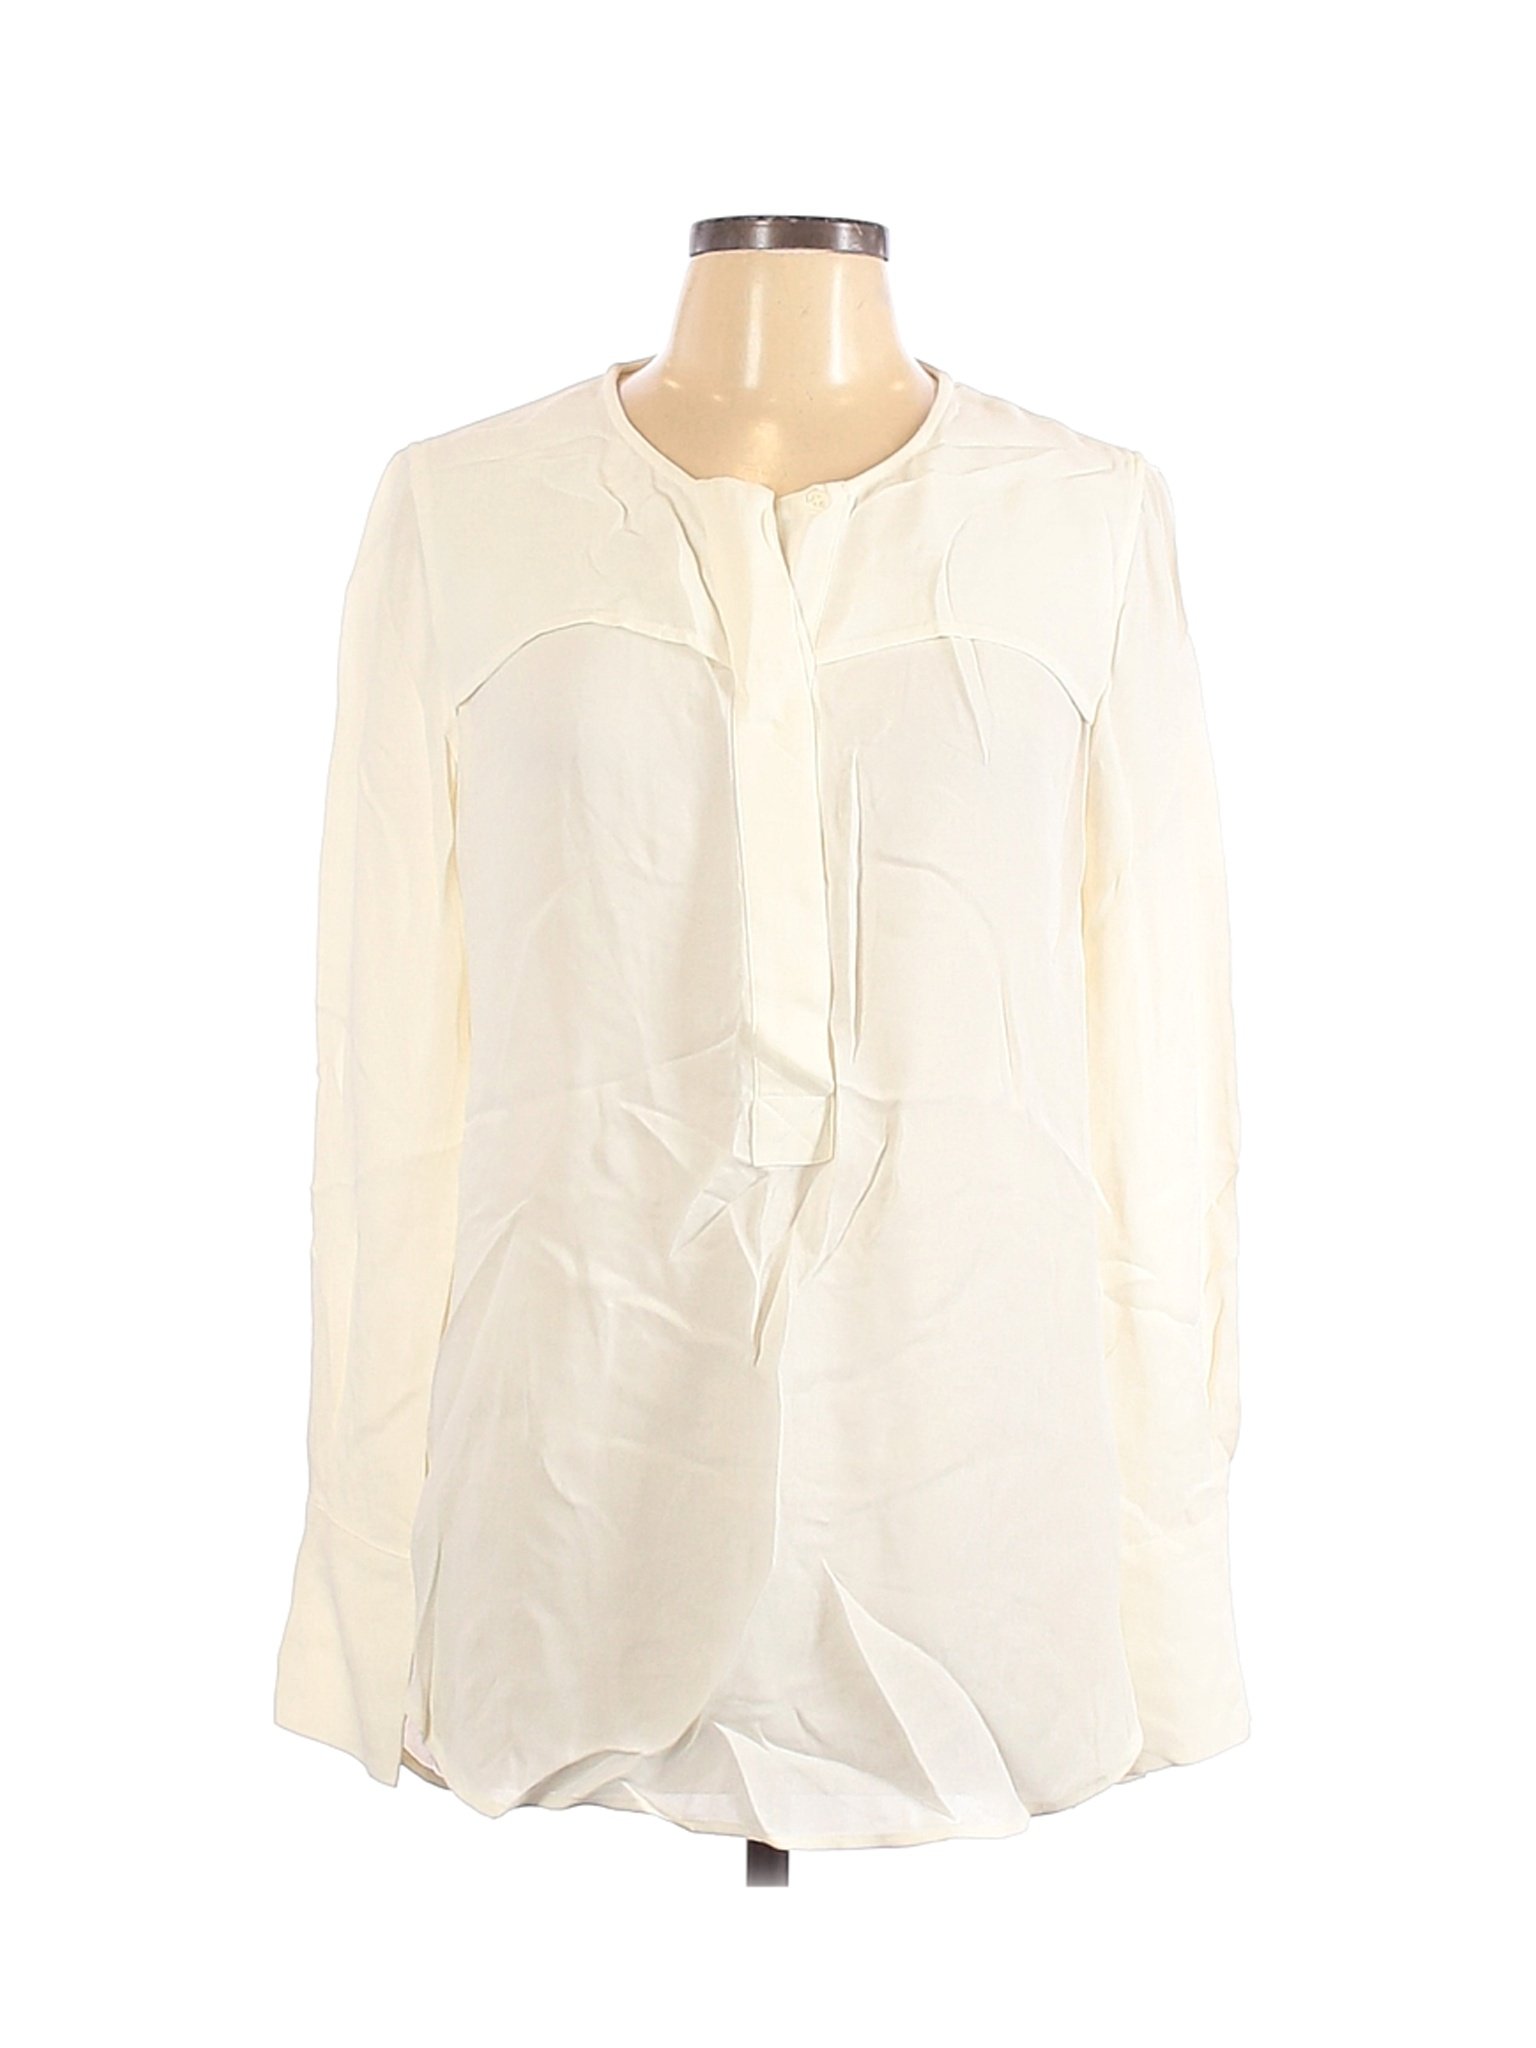 J.Crew Women Ivory Long Sleeve Blouse 12 | eBay